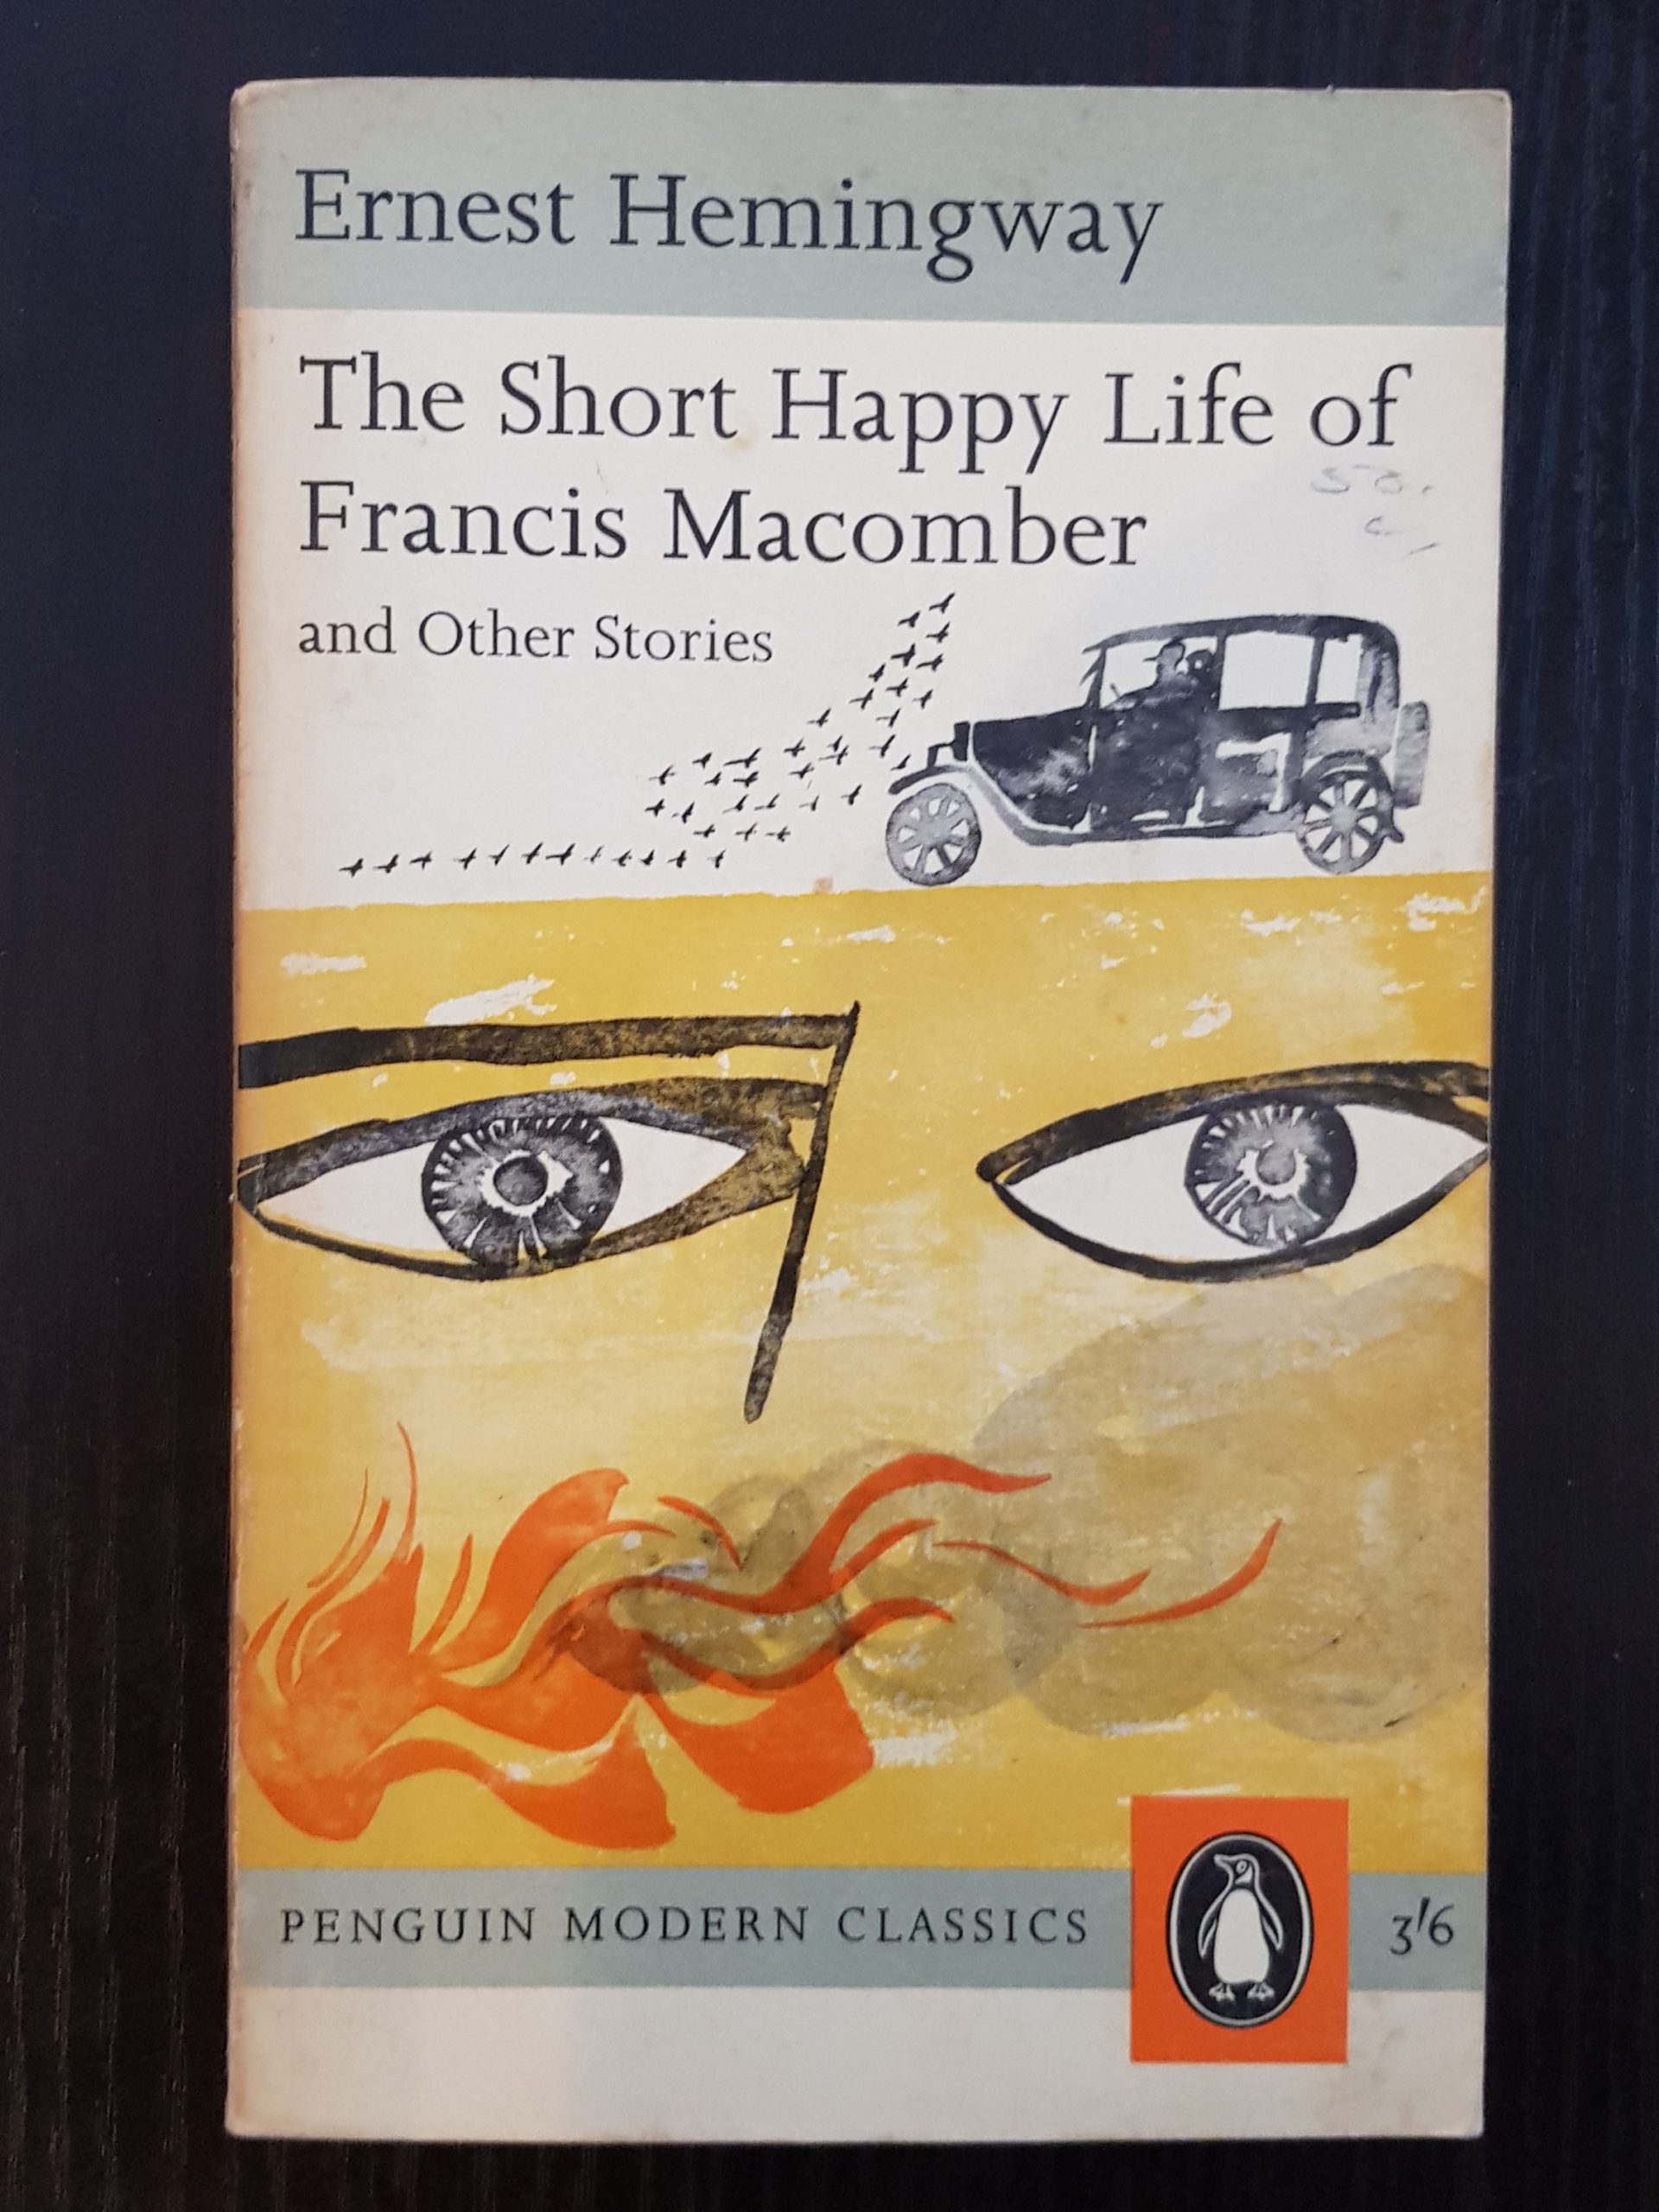 Short happy life. The short Happy Life of Francis Macomber. Недолгое счастье Фрэнсиса Макомбера книга.